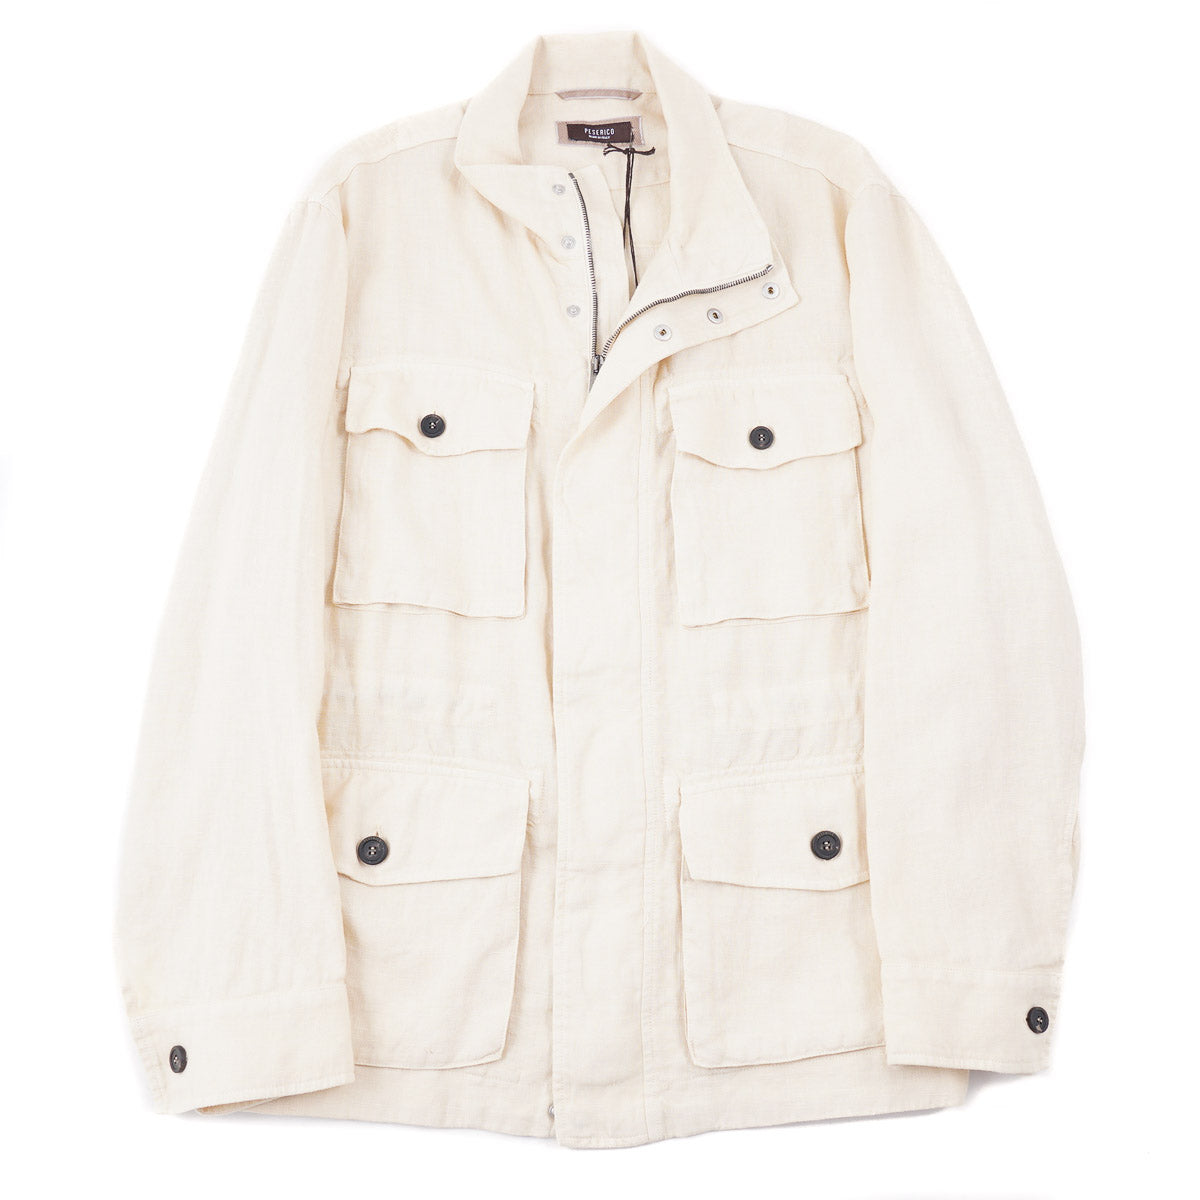 Peserico Washed Linen Field Jacket - Top Shelf Apparel